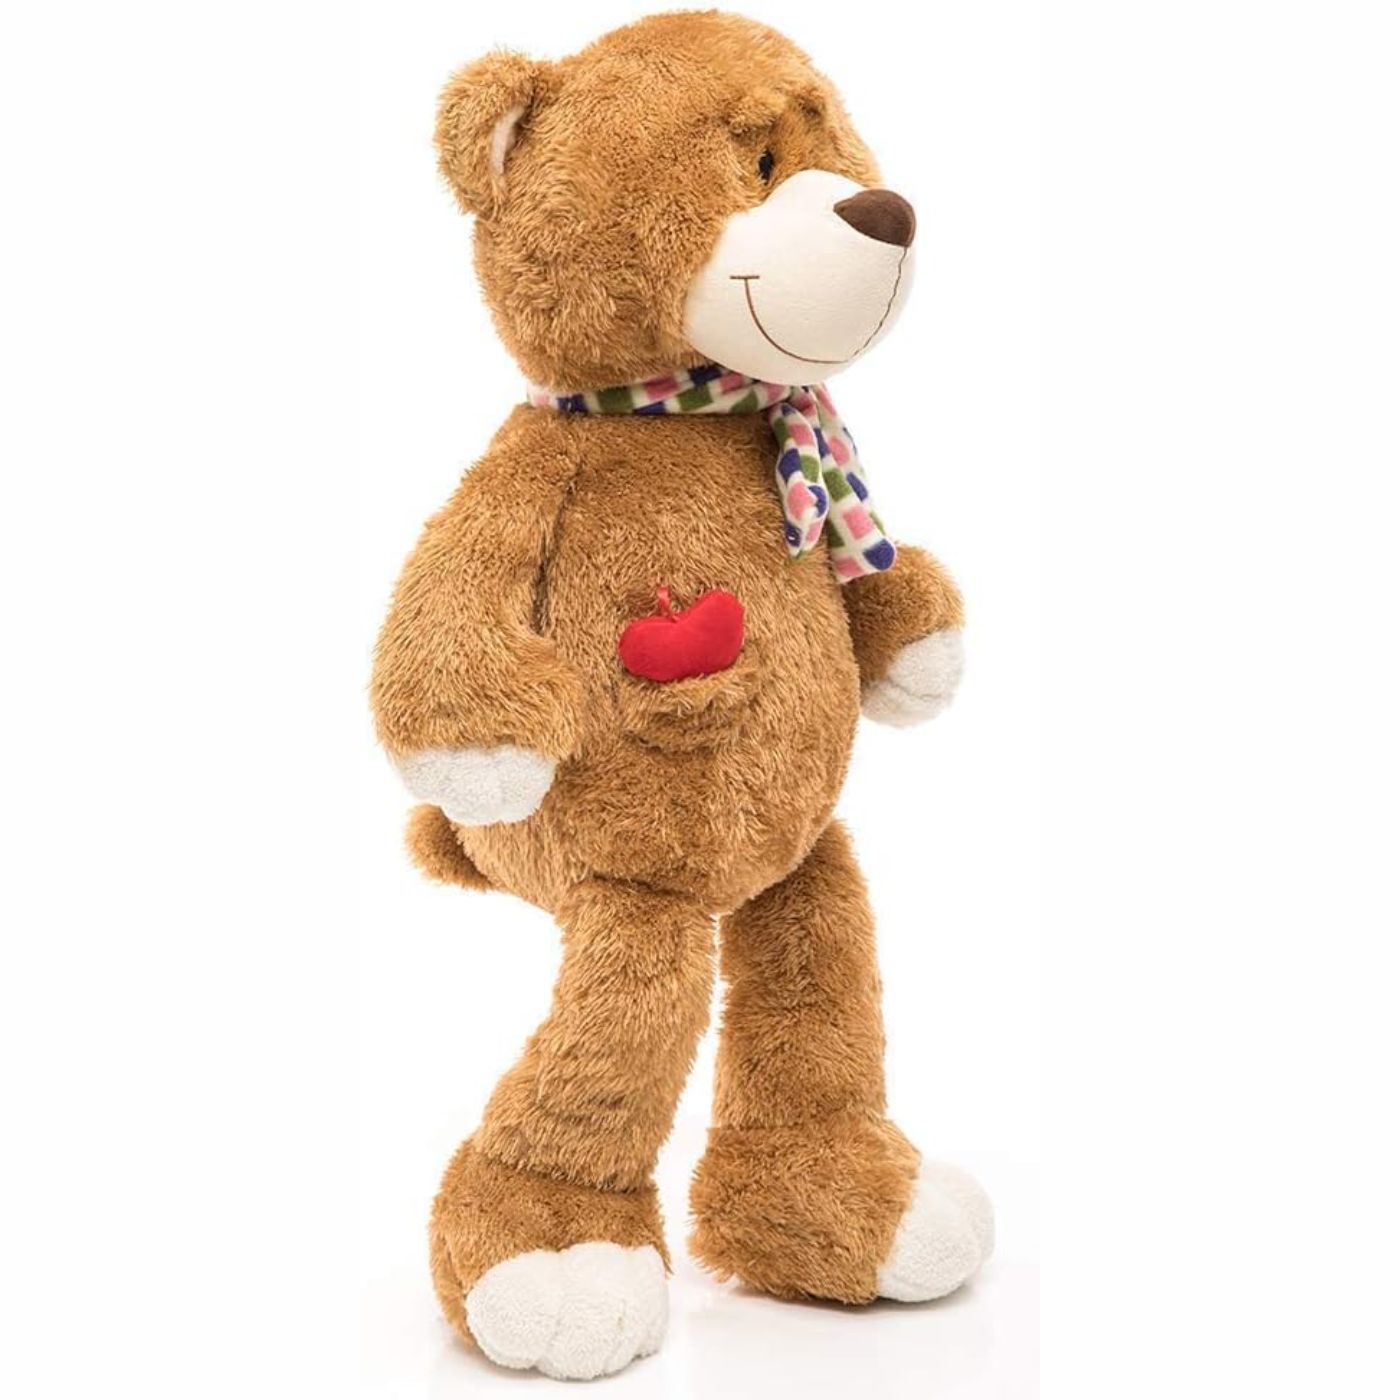 Giant Teddy Bear Plush Toy, 30 Inches